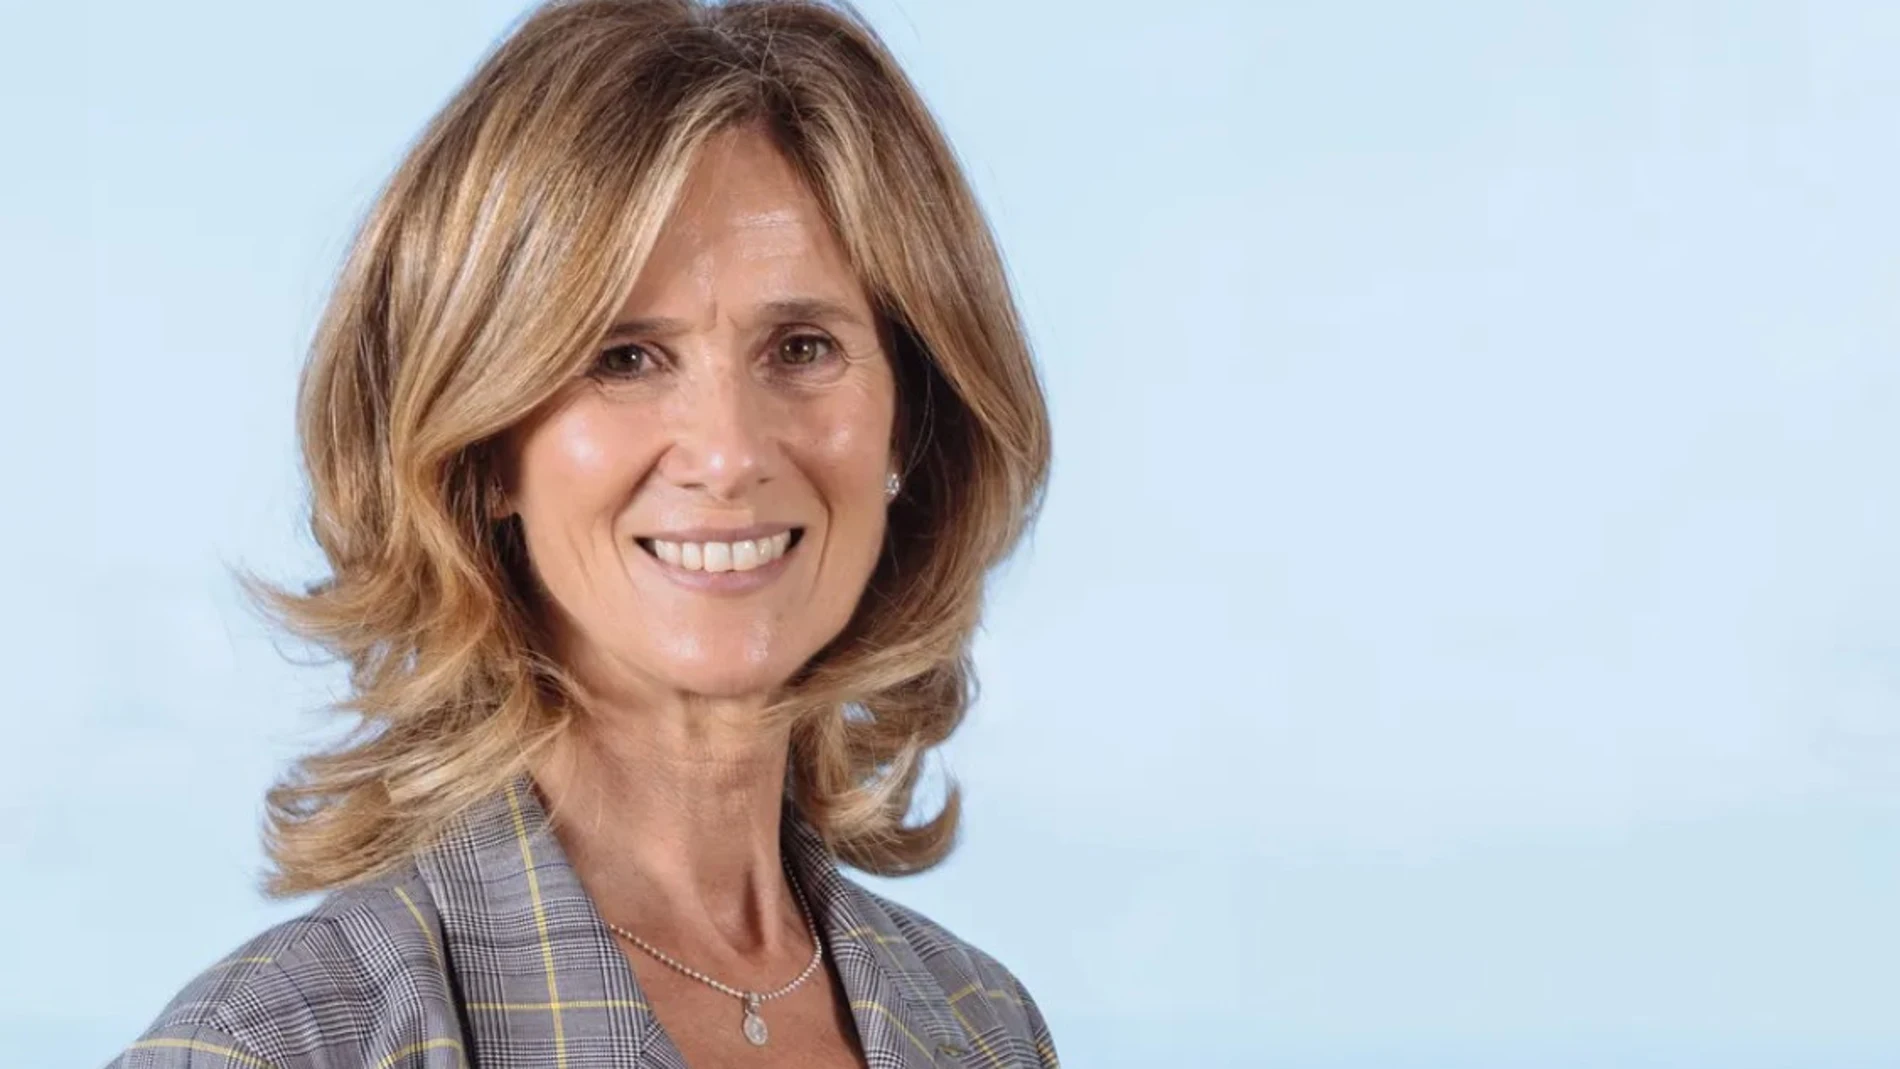 La exministra socialista Cristina Garamendia, nueva presidenta de Mediaset España